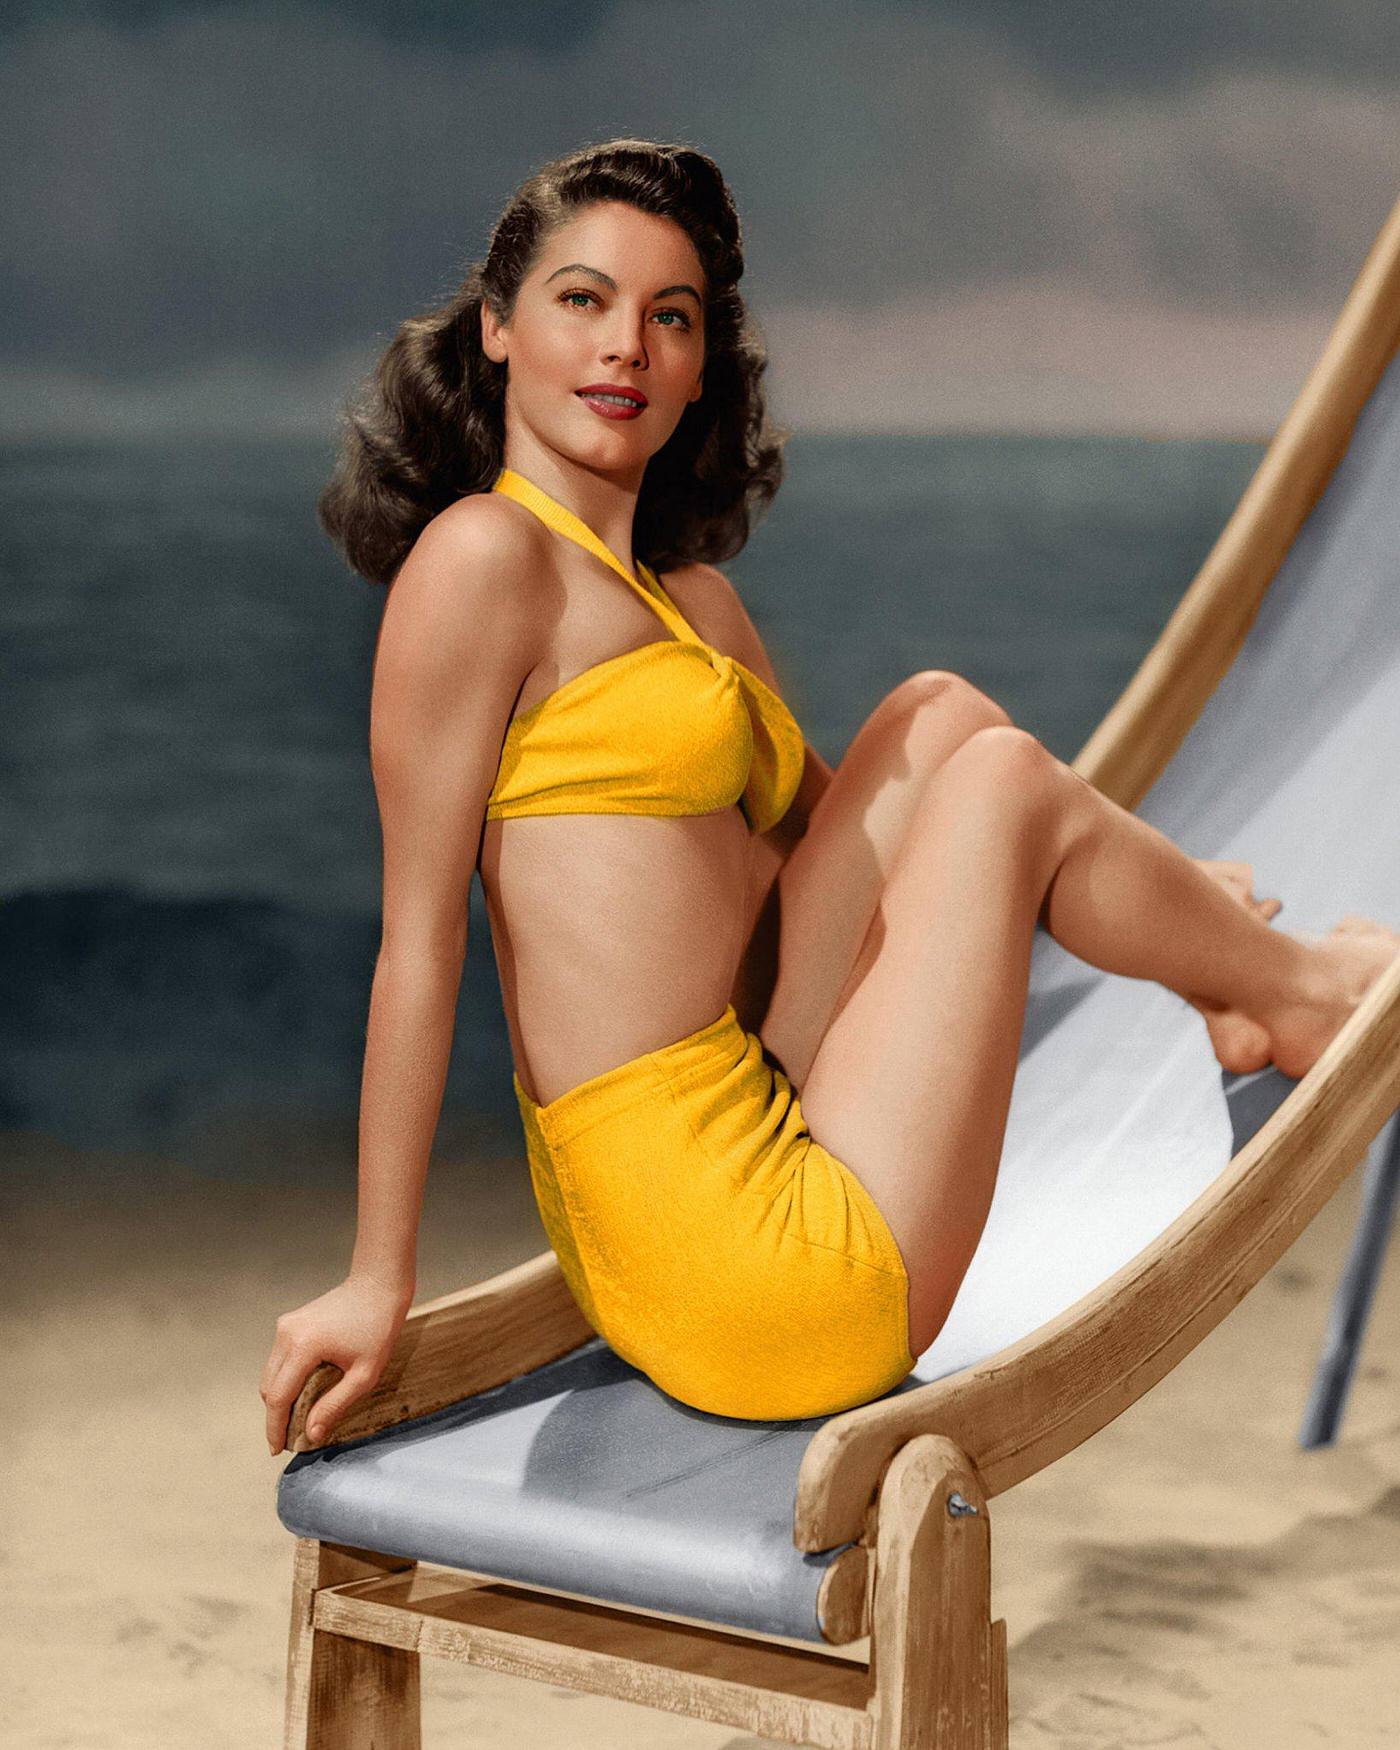 Ava Gardner posing on a deckchair in a yellow bikini, 1945.